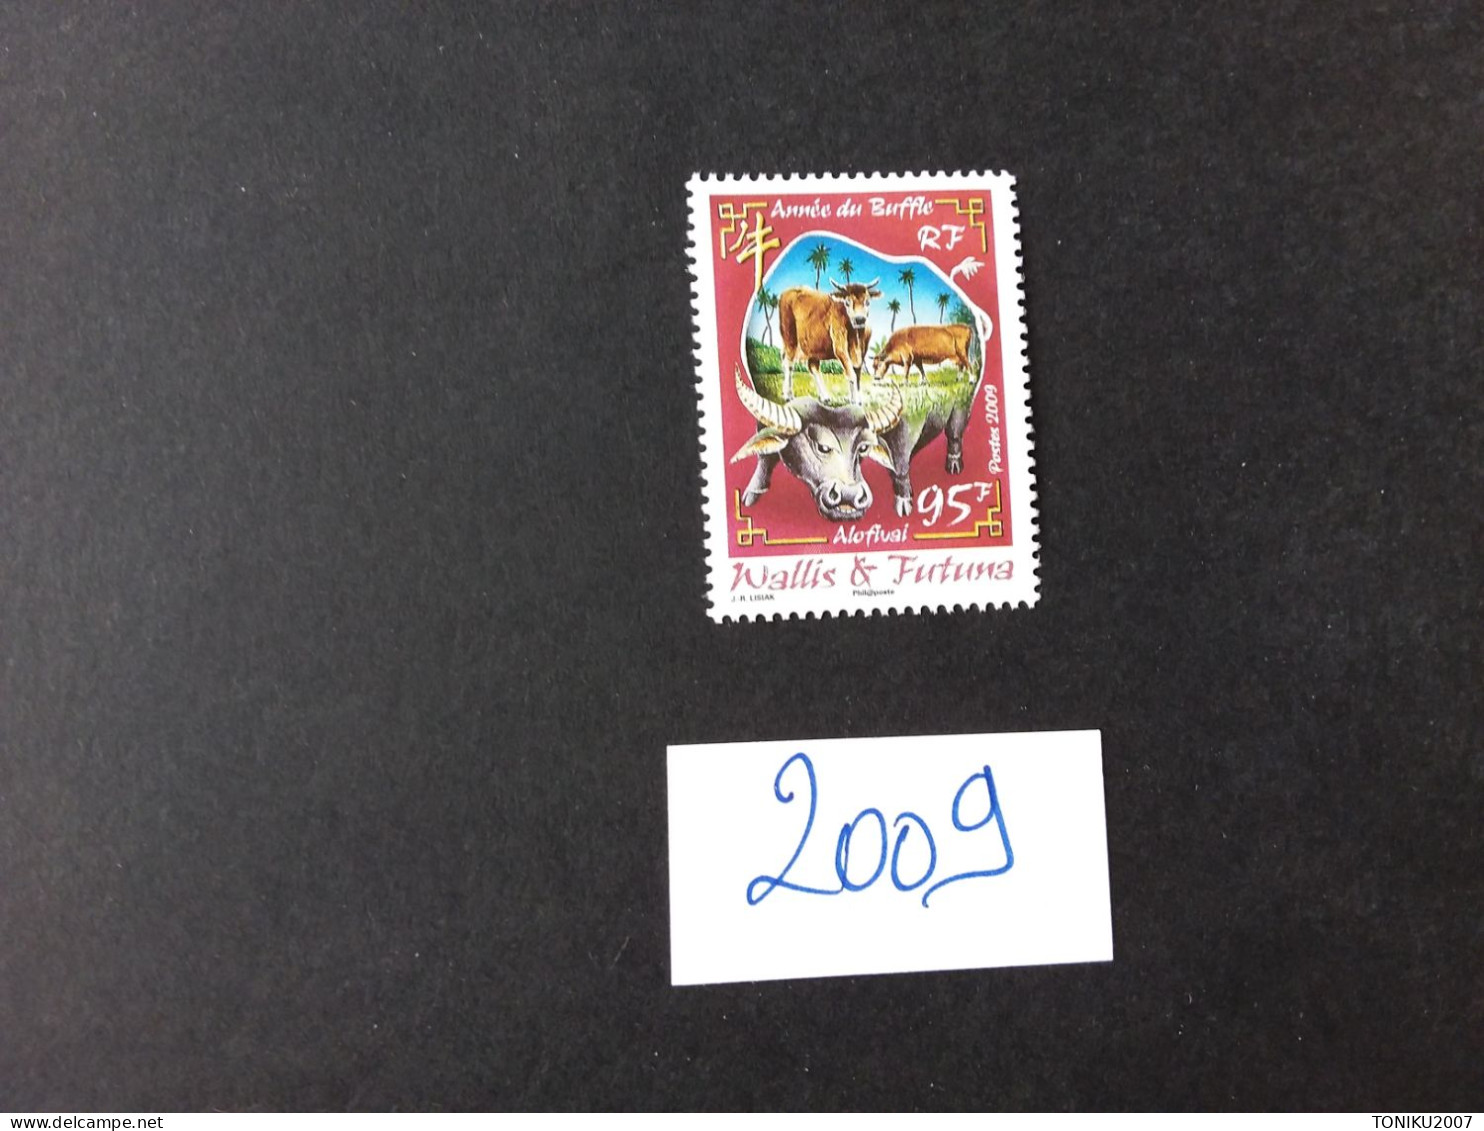 WALLIS ET FUTUNA 2009** - MNH - Unused Stamps